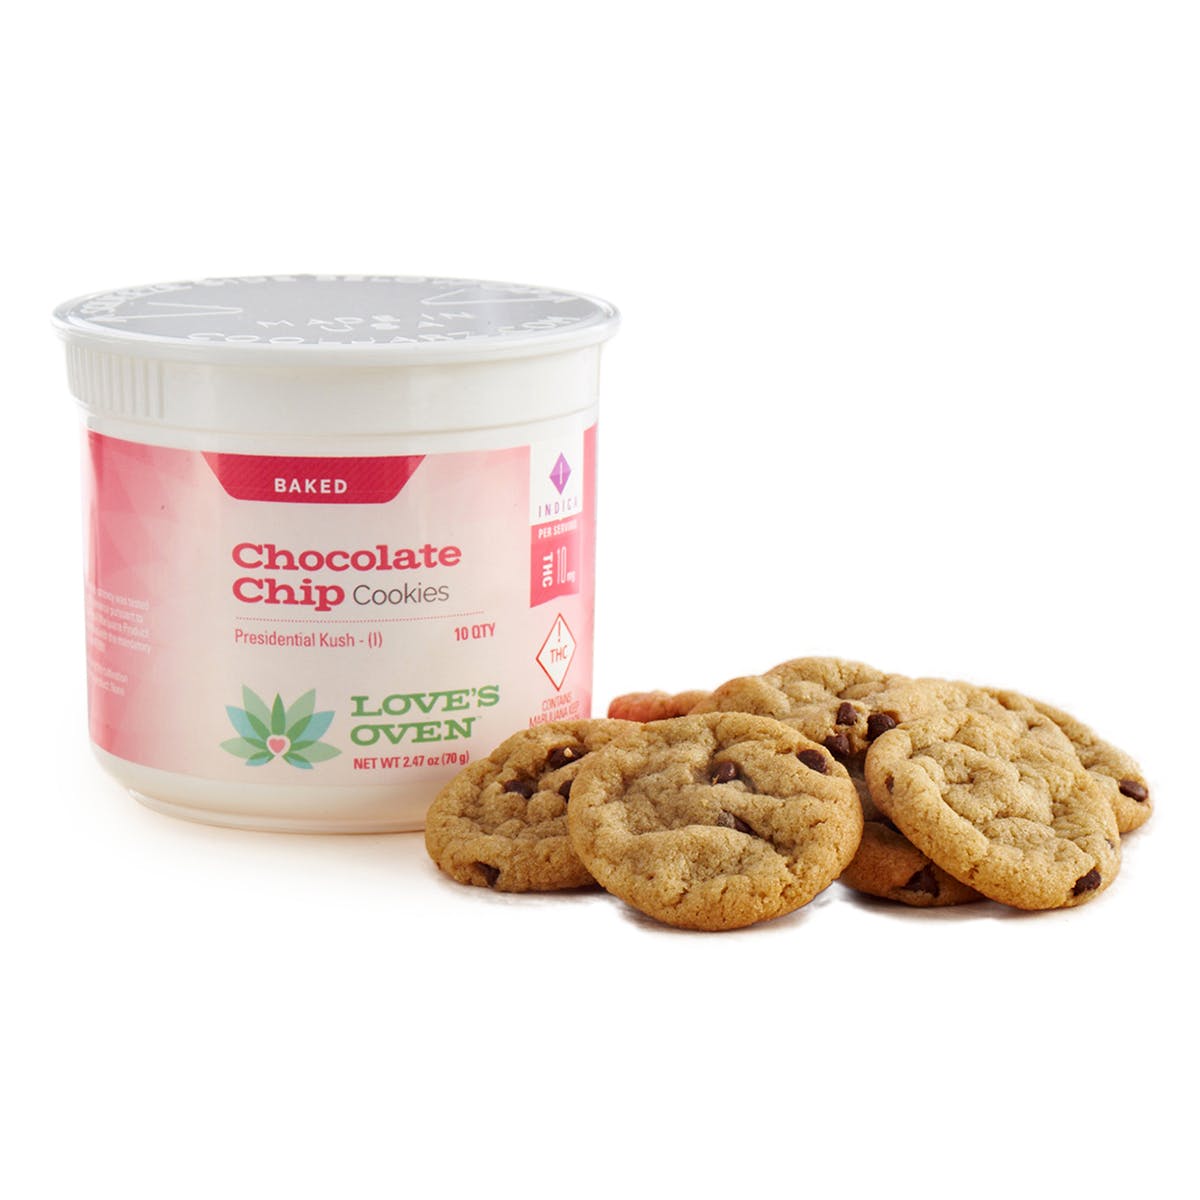 marijuana-dispensaries-golden-meds-recreational-21-2b-in-denver-recreational-chocolate-chip-cookies-2c-100mg